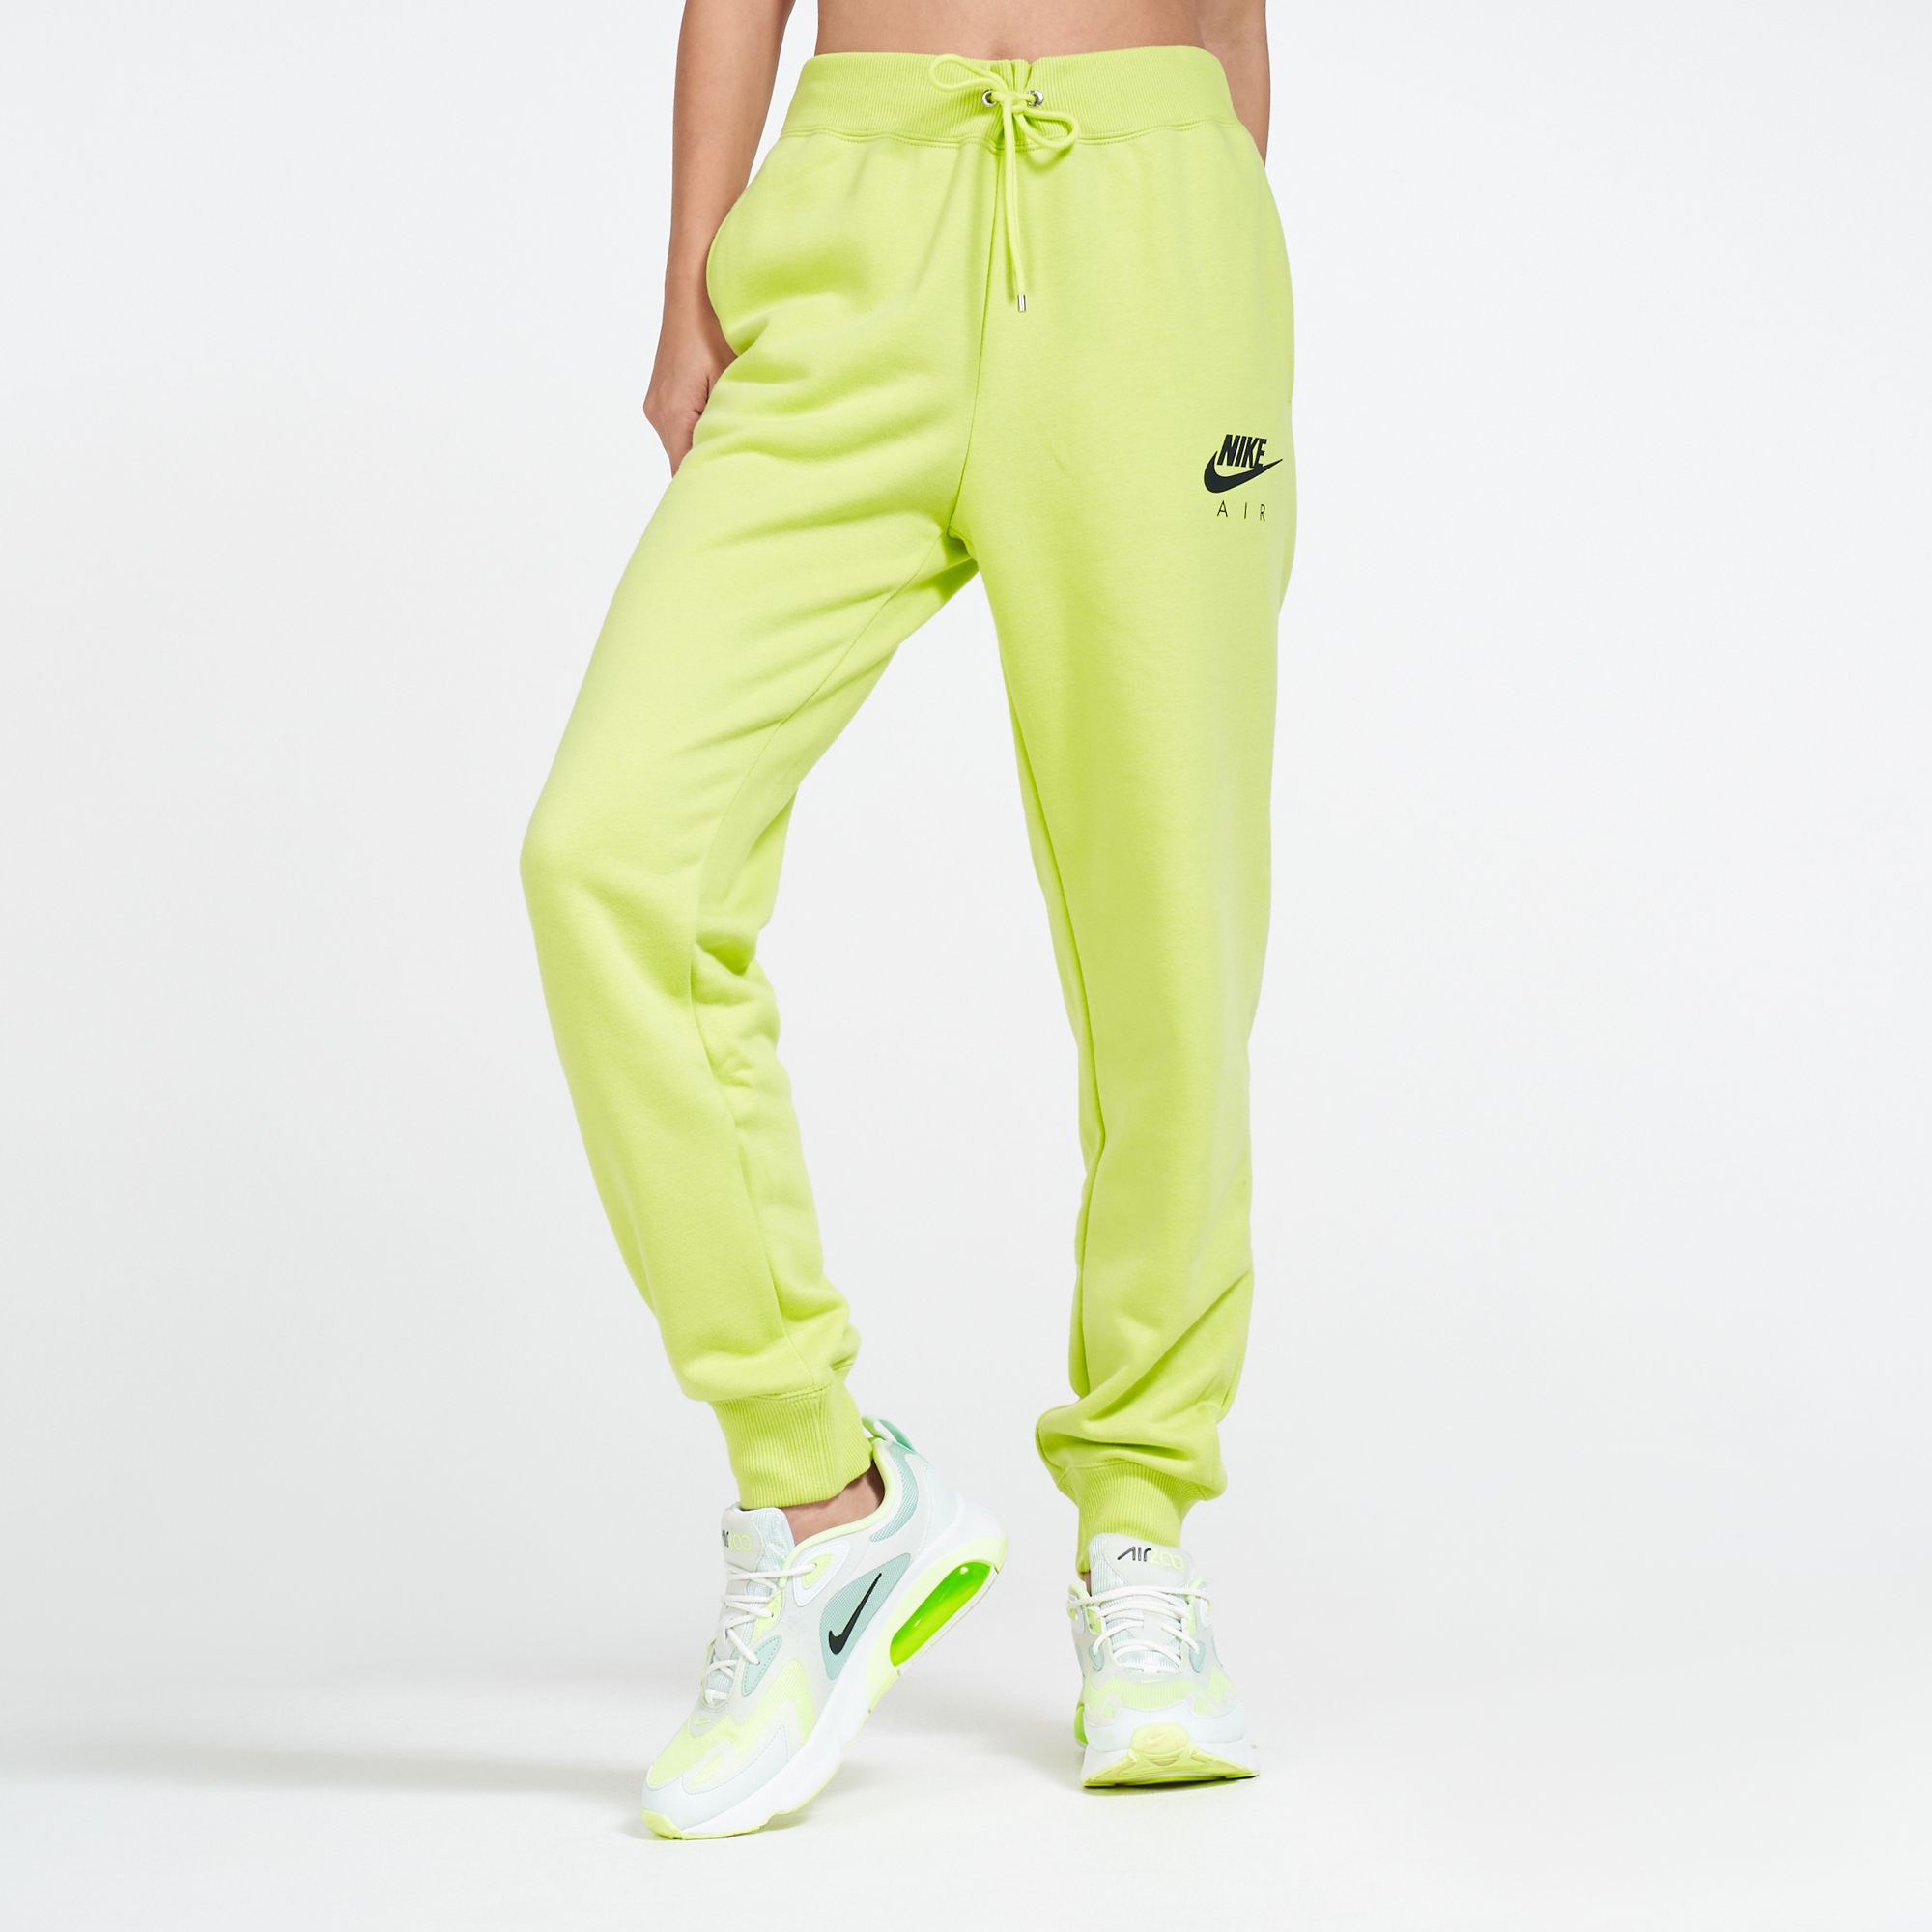 Nike Women's Sportswear Air Pants | Pants | Clothing | Women's Sale ...